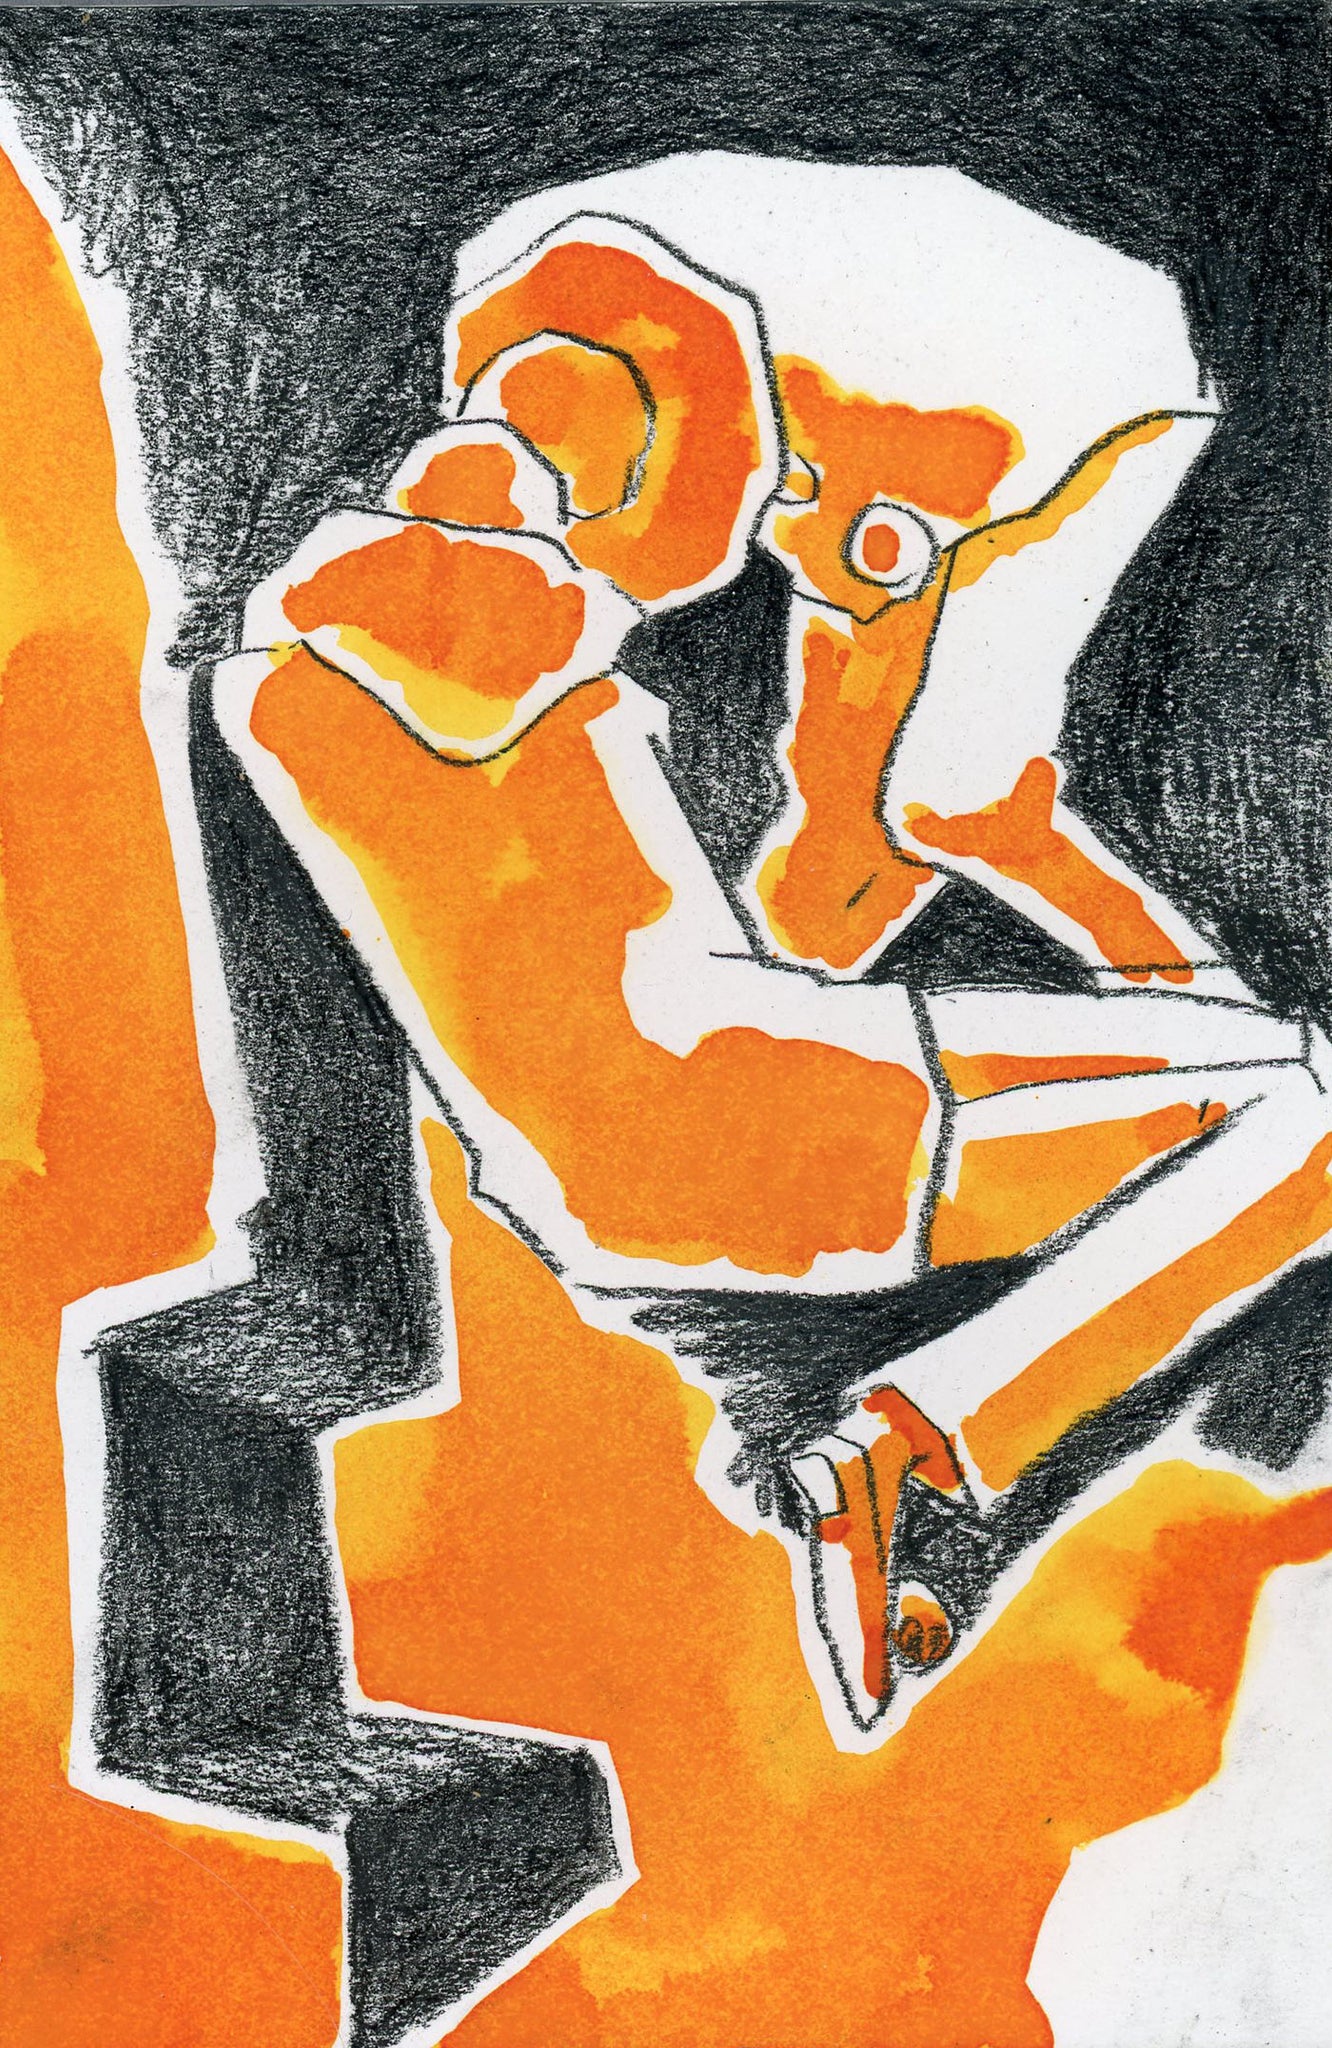 Drawing #21: "Pierrots in Black and Orange"